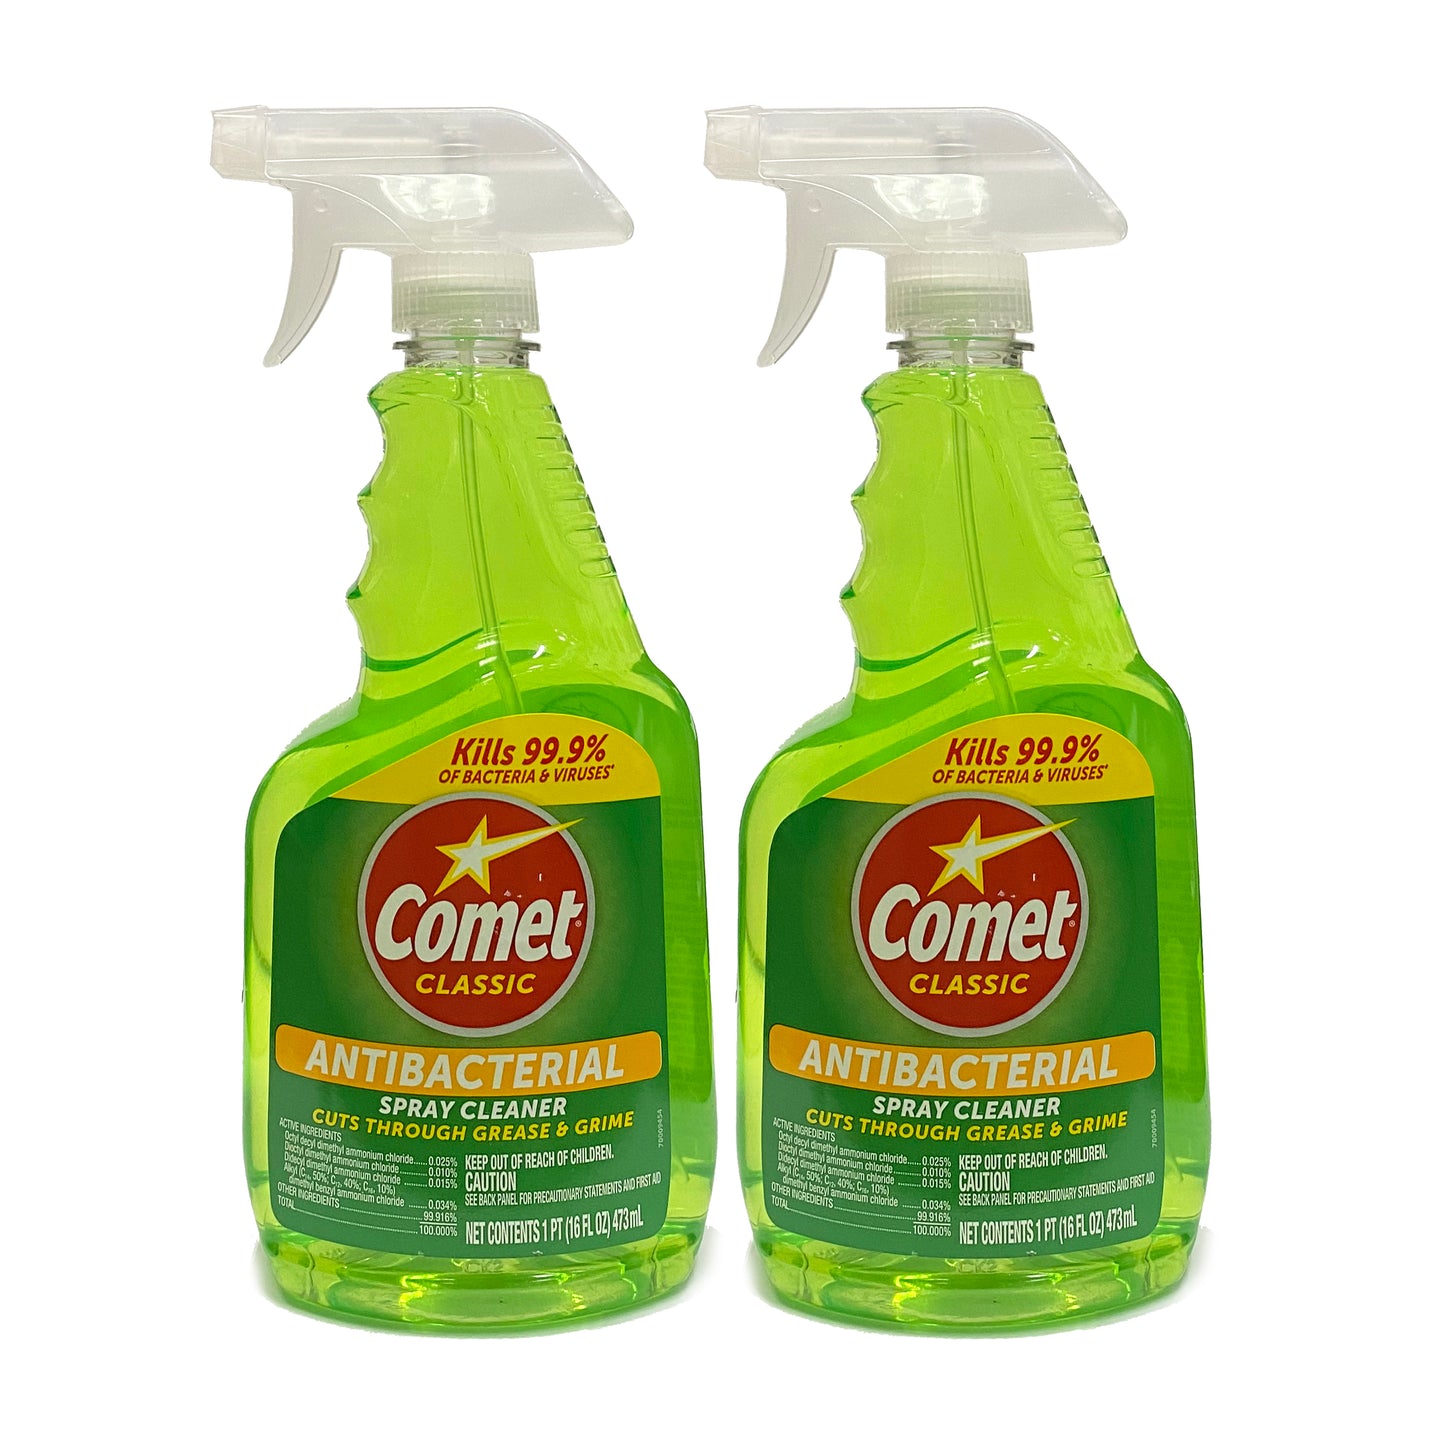 Comet Classic Antibacterial Spray Cleaner 16 oz "2-PACK"